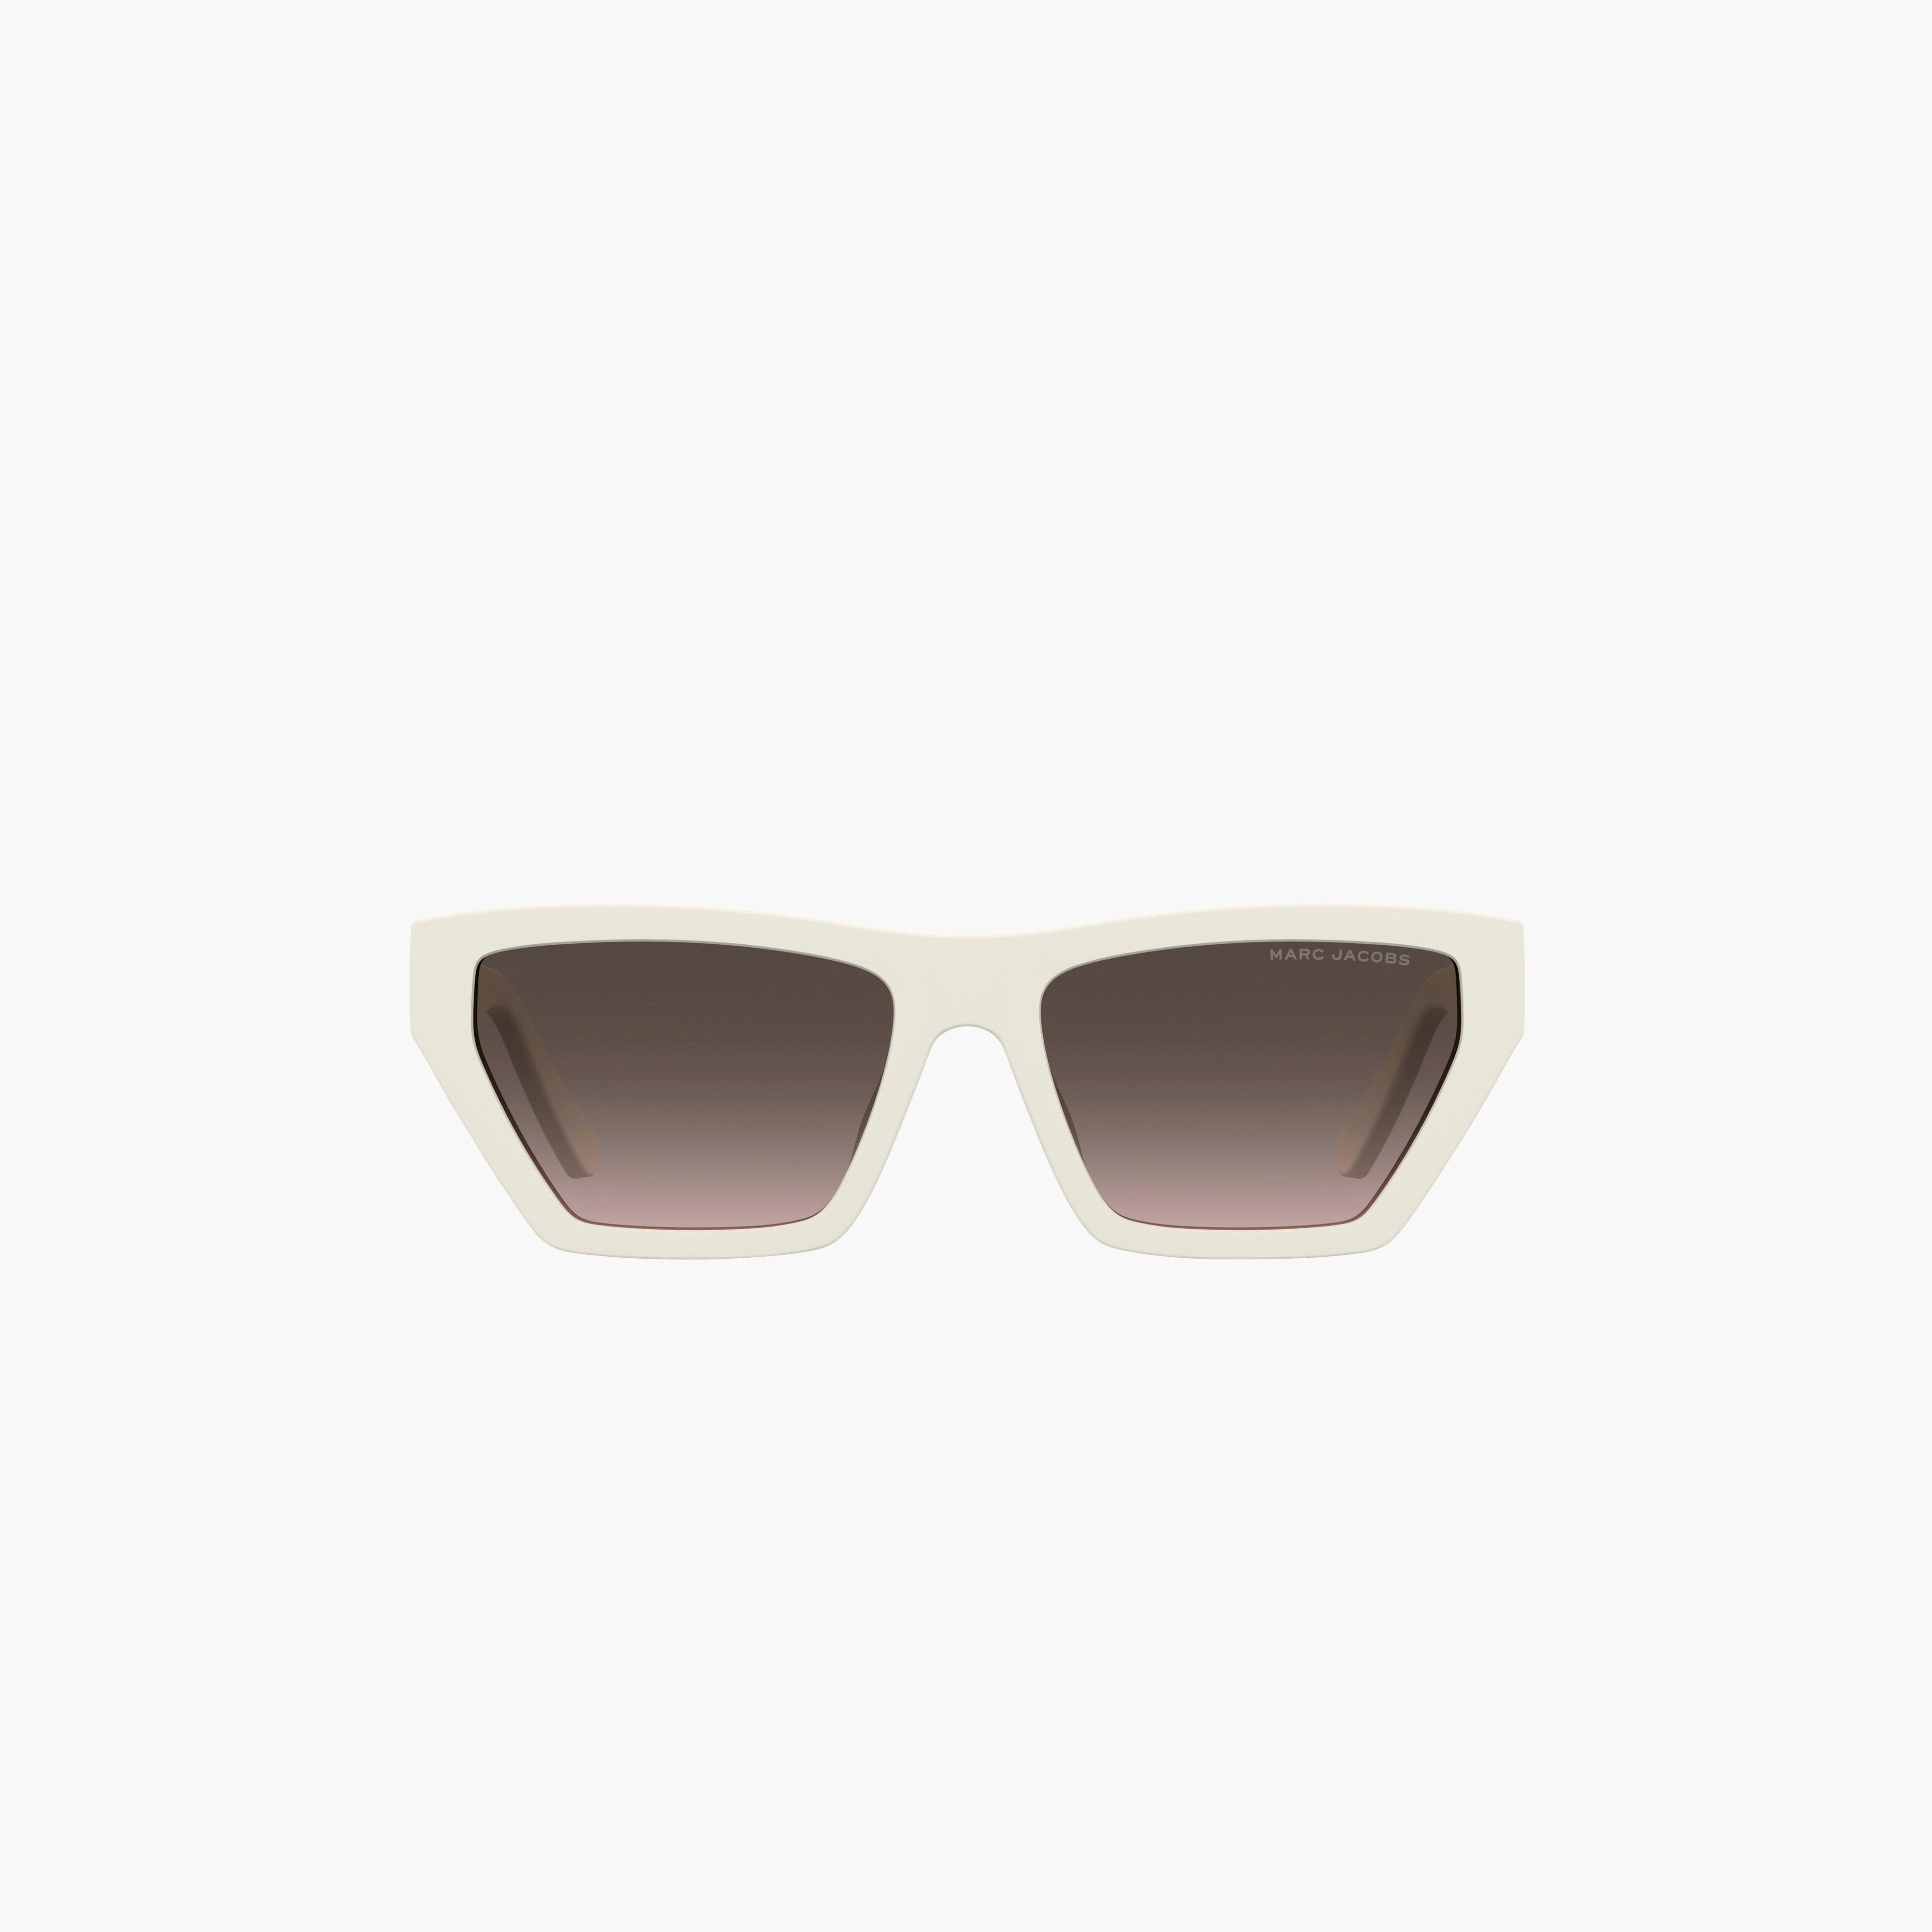 Marc Jacobs 502 Fashion Show Style White Gray Stripe Sailor MJ502S  Sunglasses | eBay